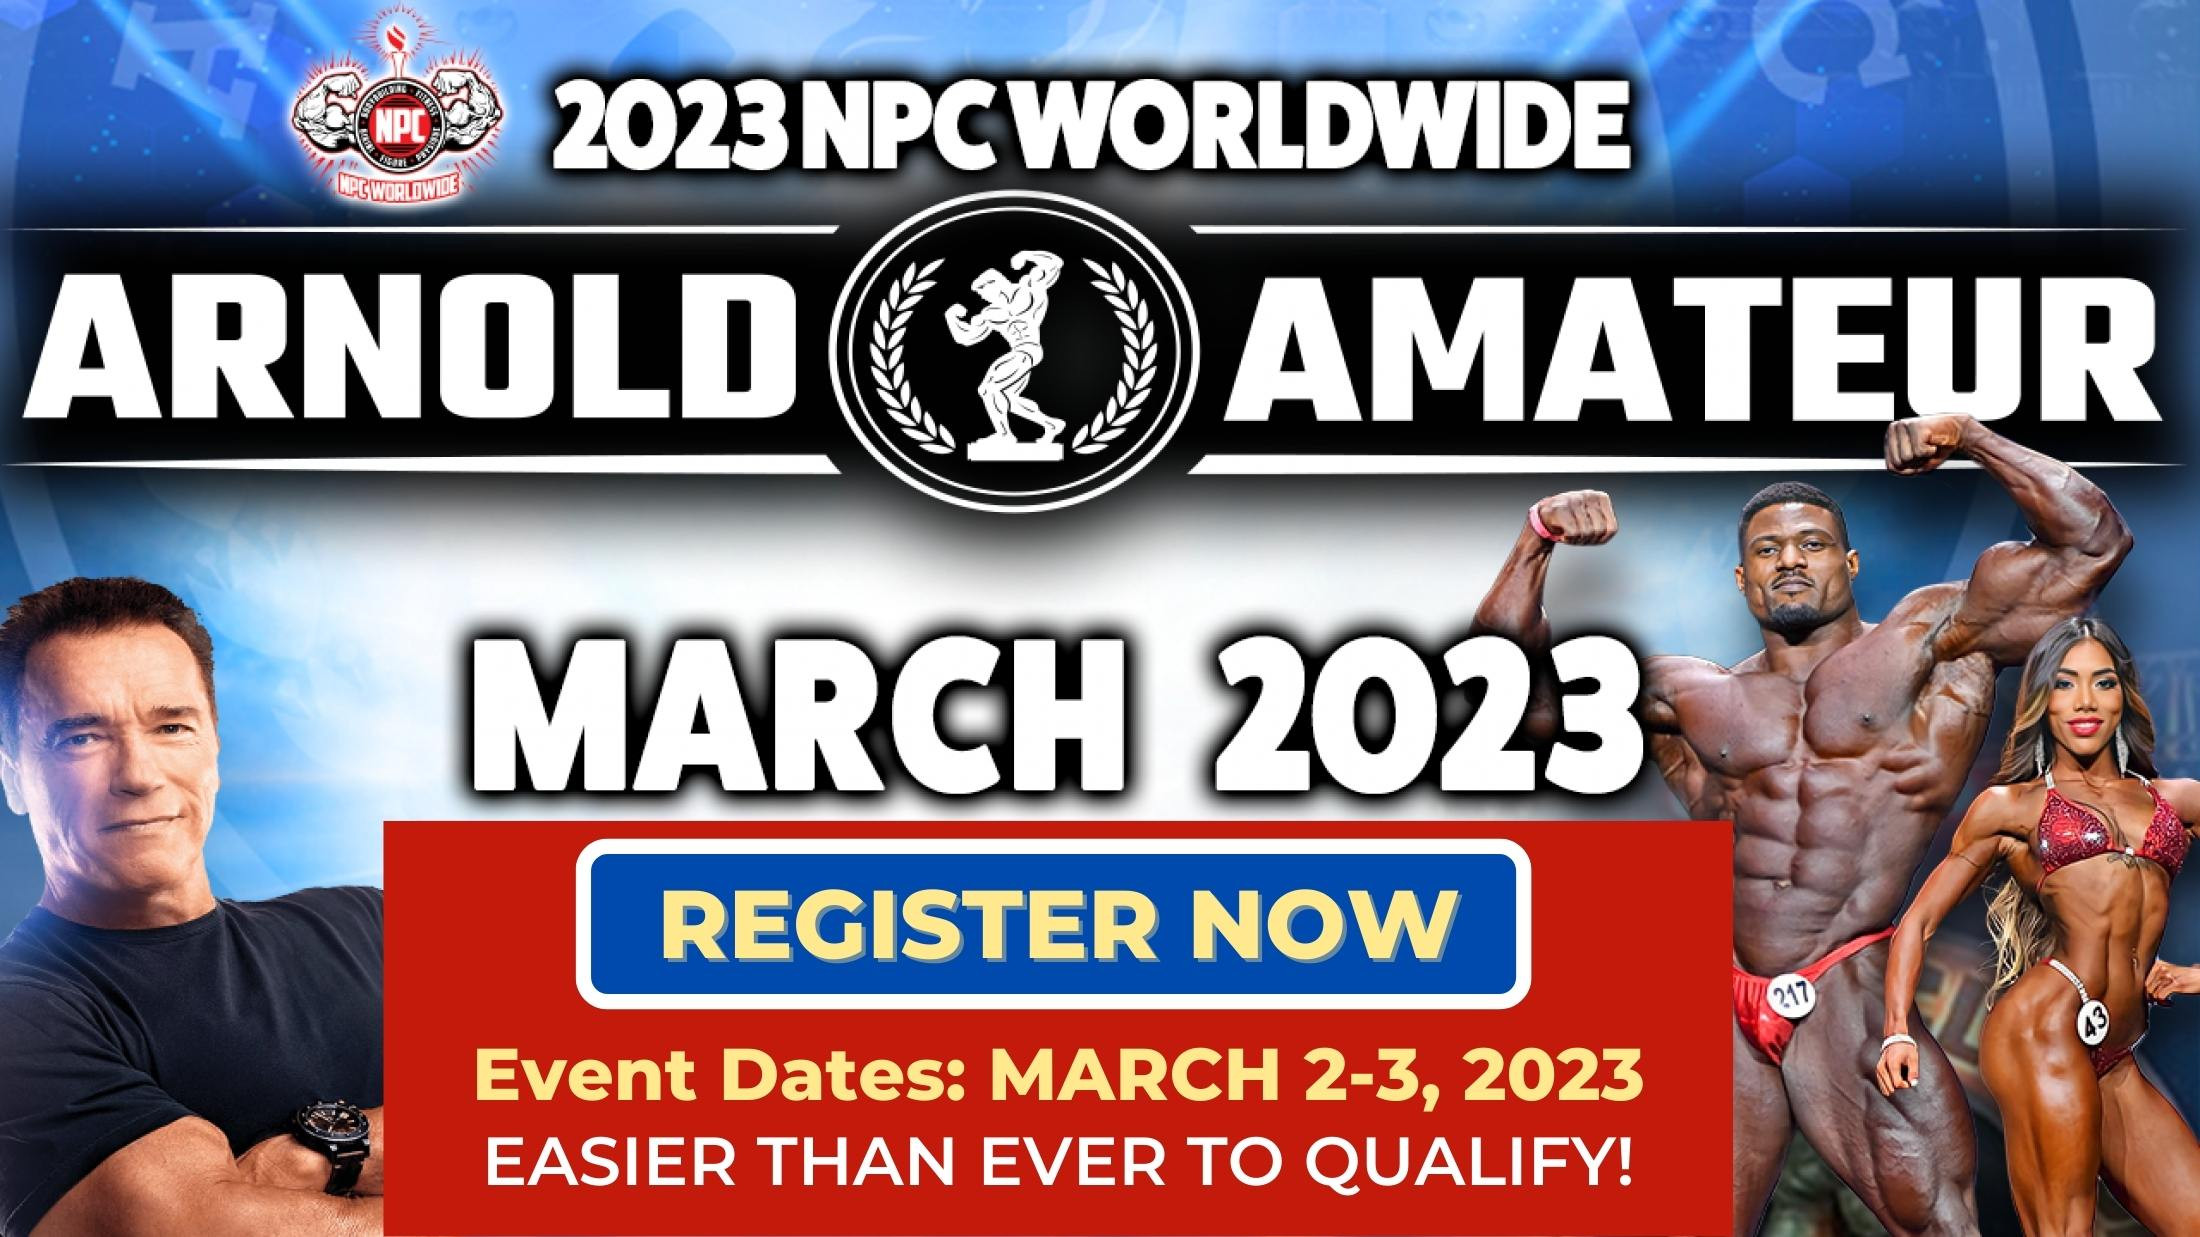 2023 NPC Worldwide Arnold Amateur - March 2023